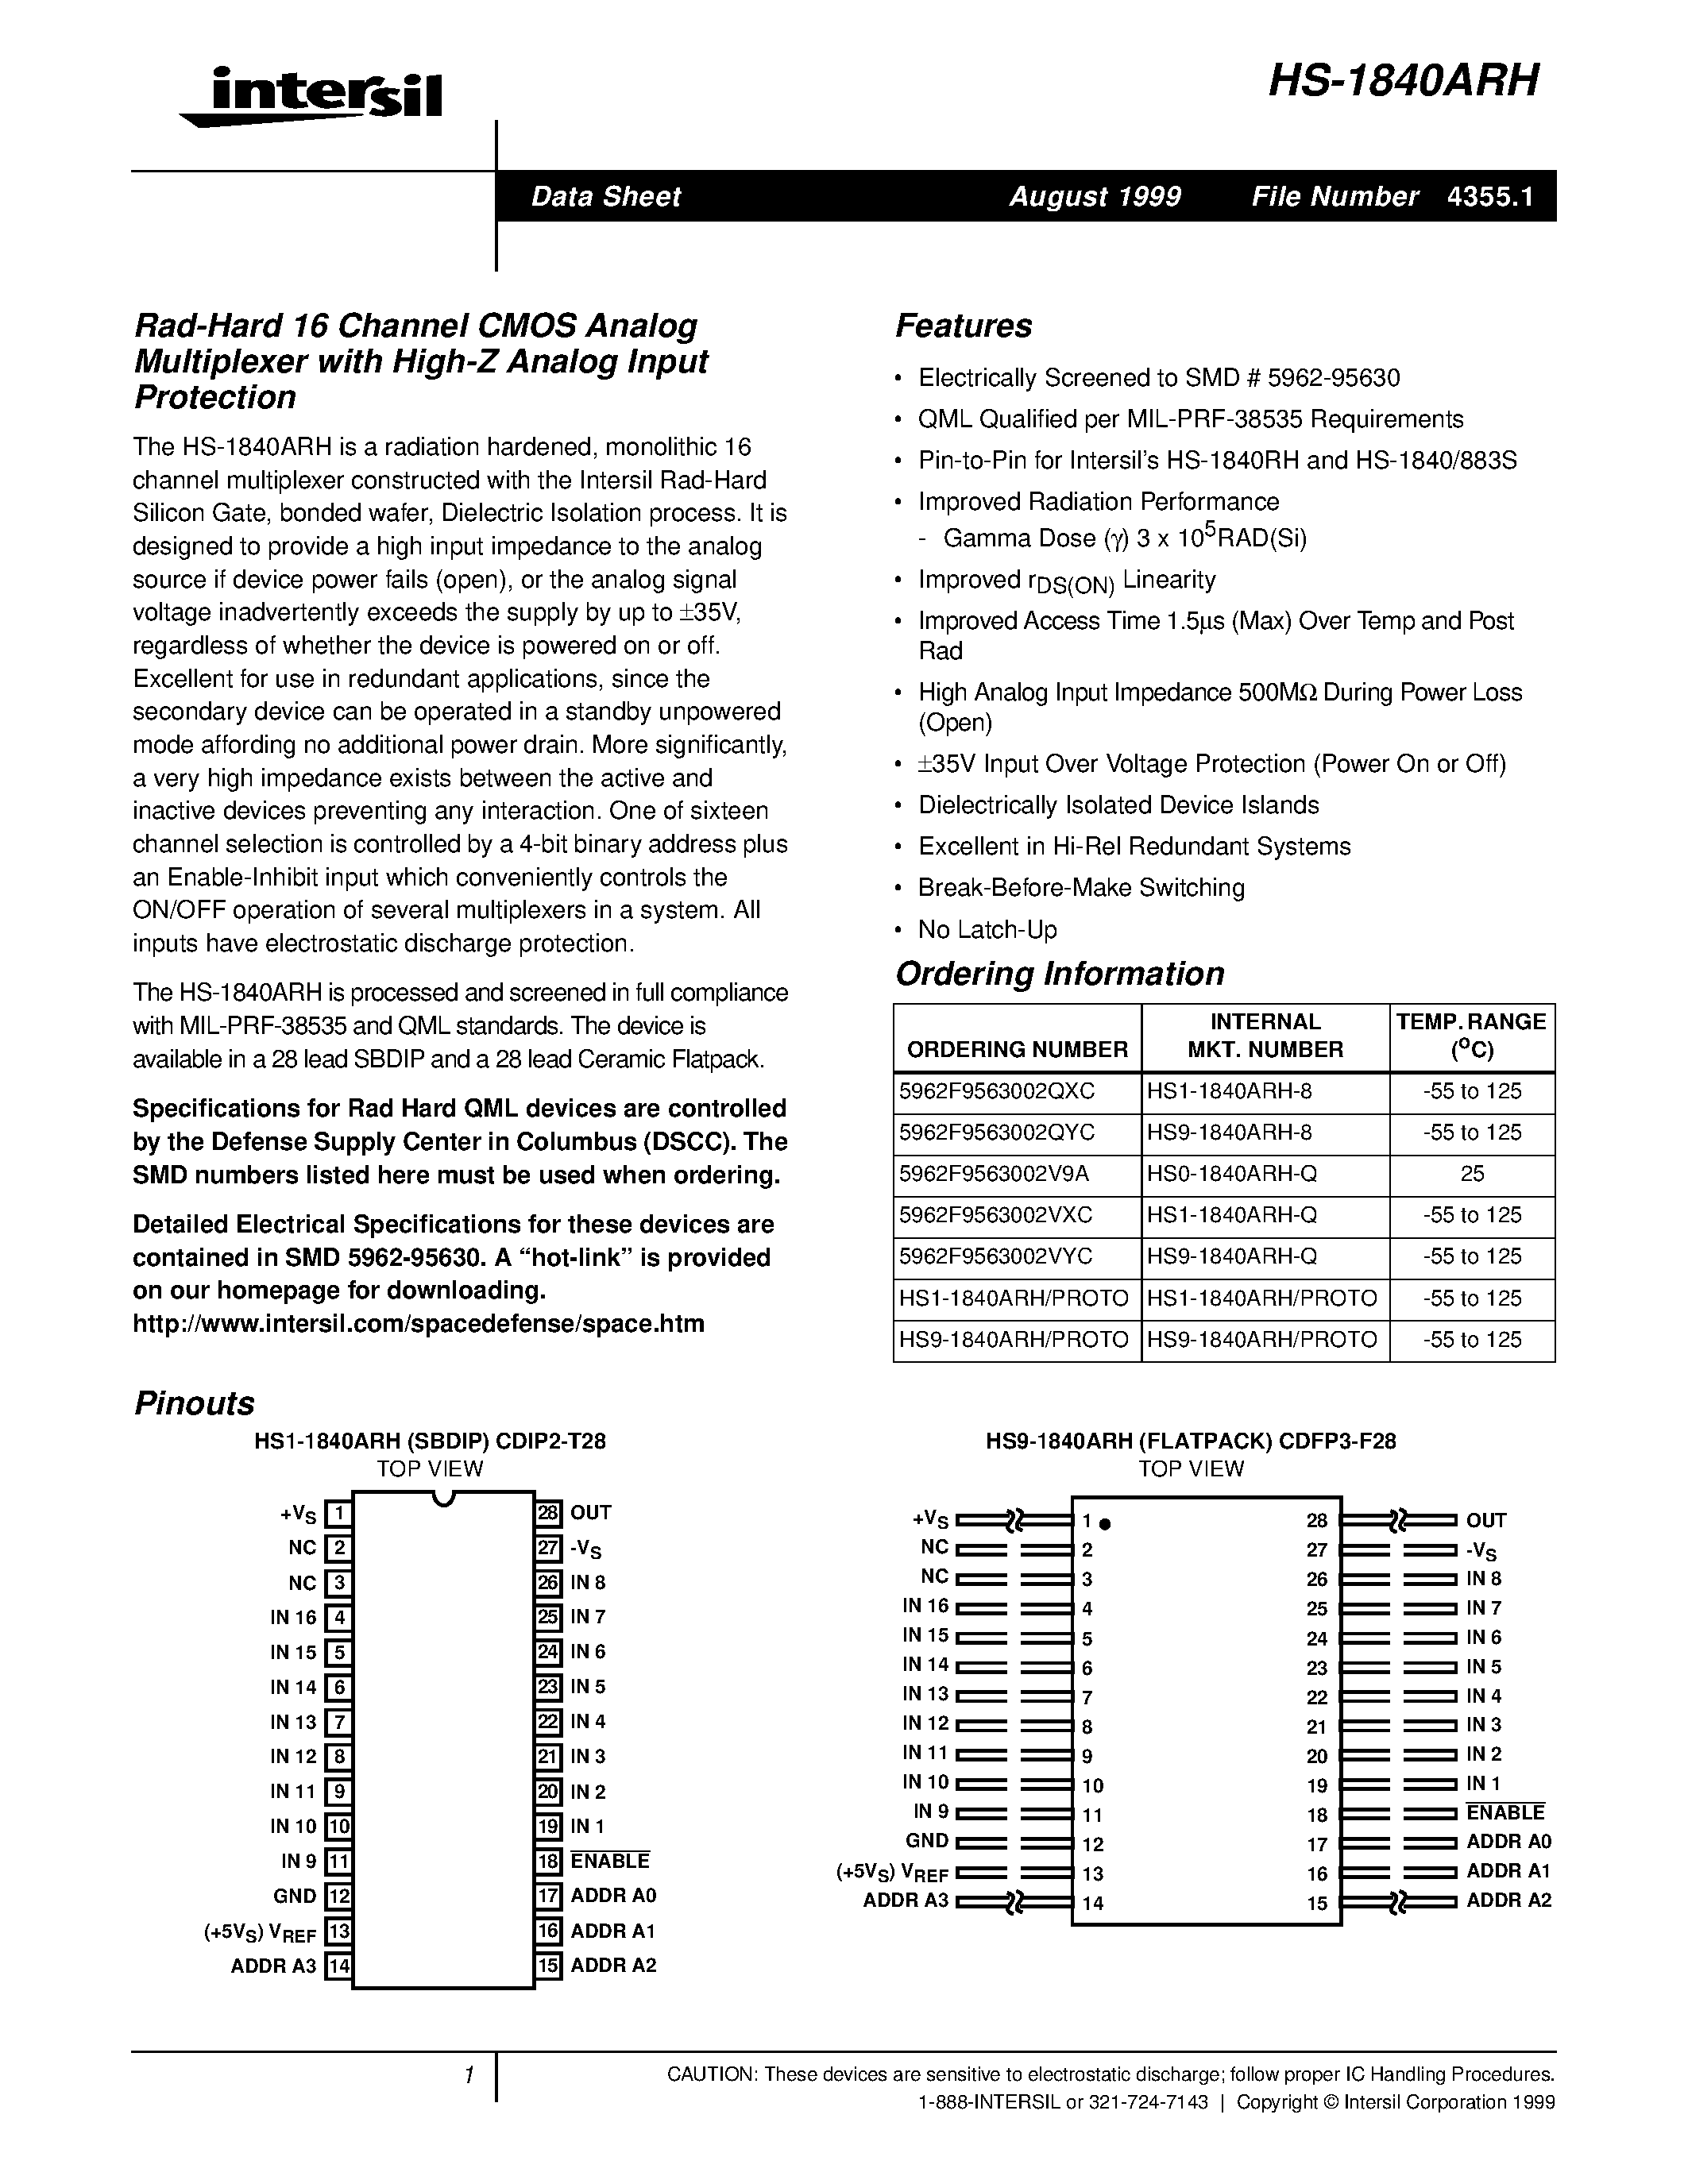 Даташит HS0-1840ARH-Q - Rad-Hard 16 Channel CMOS Analog Multiplexer with High-Z Analog Input Protection страница 1